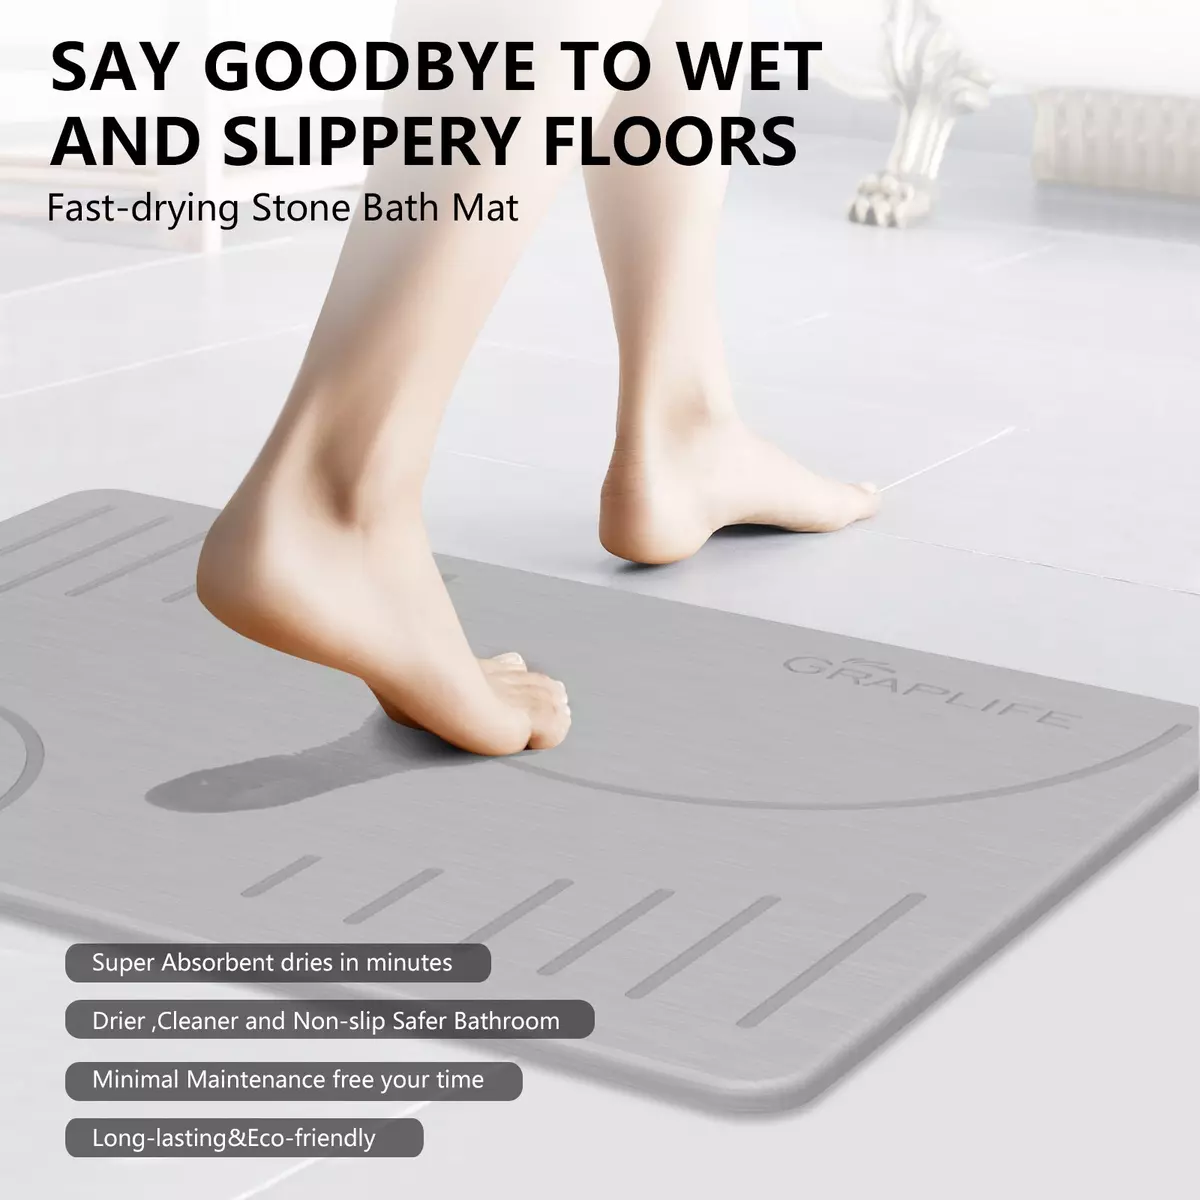 2023 Bath Stone Mat Luxury Diatomaceous Earth Shower Mat- Non